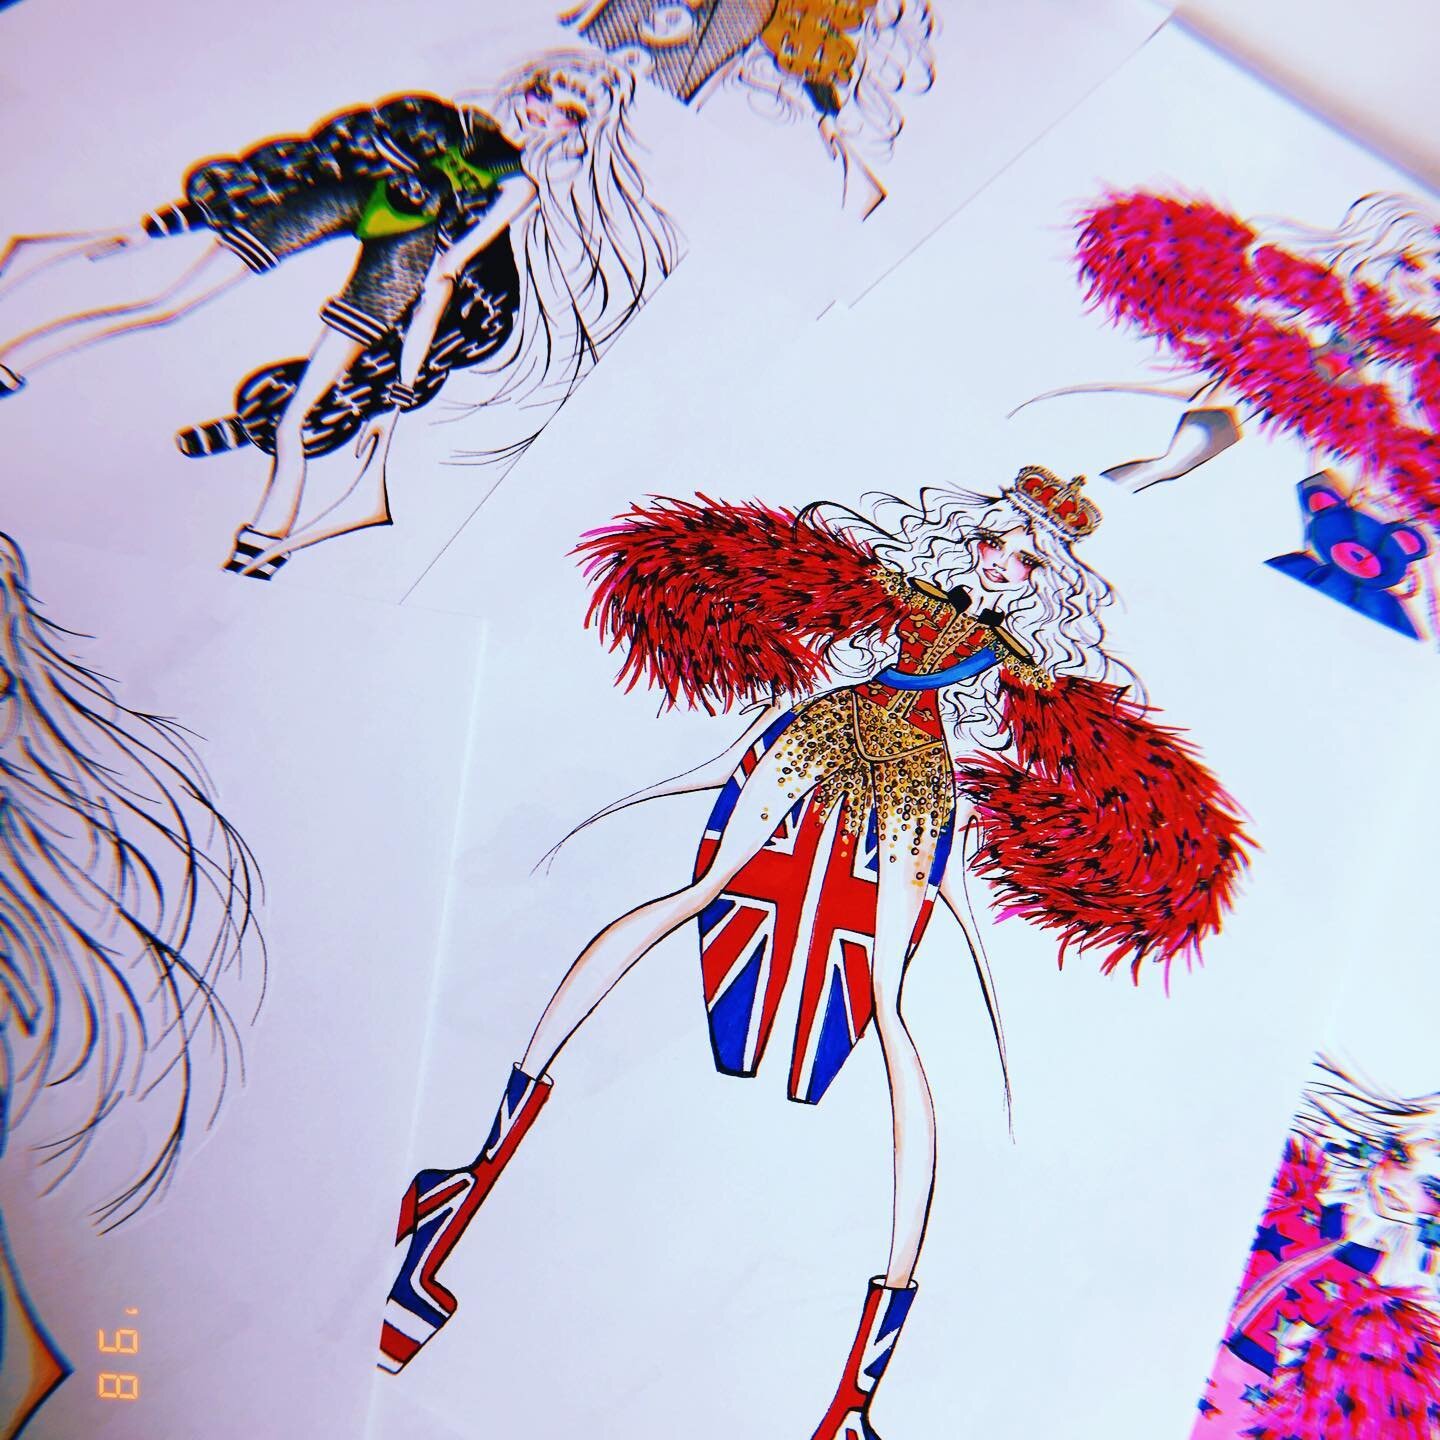 #ARNIERI Illustrations from the 2019 Wannabe Collection 🐆🍭🇬🇧👠⚽️
Can&rsquo;t wait to share new work with everyone soon xx 
.
.
.
.
#Fashion #CanadianFashion #Toronto #fashiondesigner #wearingart #torontofashion #sparkle #fashionweek #londonfashio